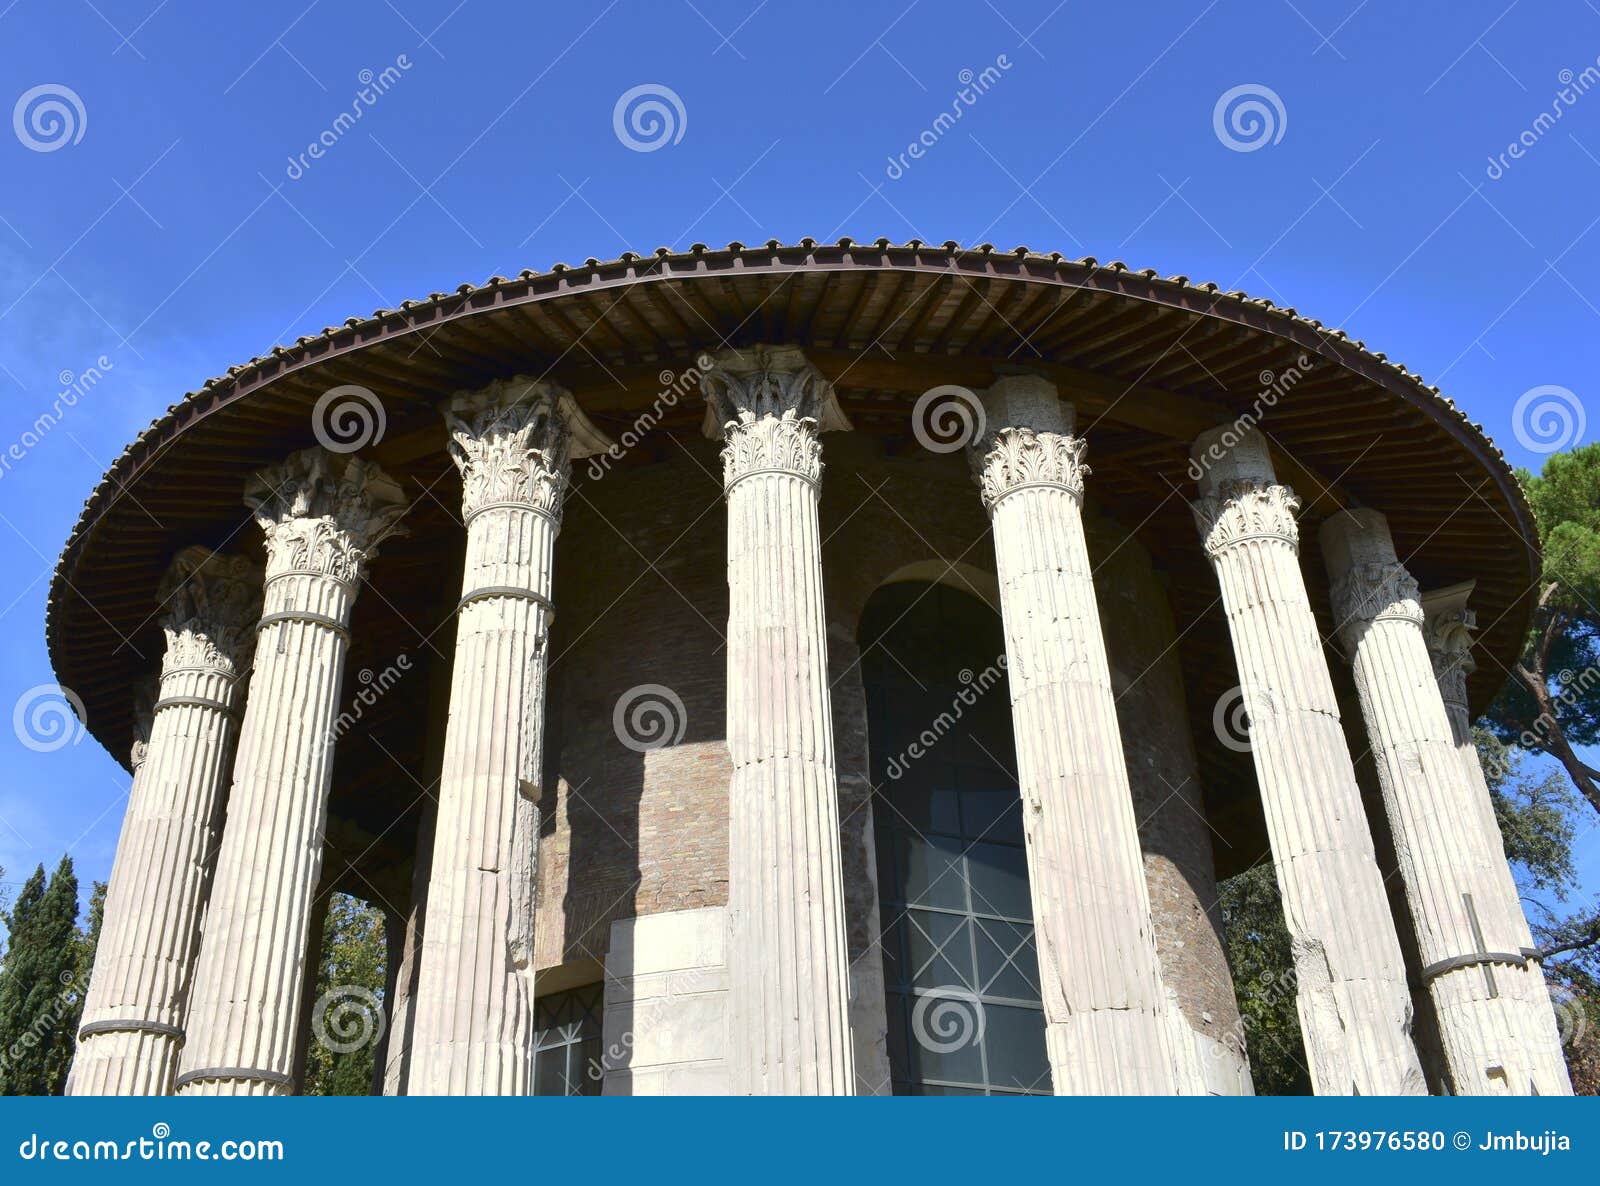 tempio di ercole vincitore or temple of hercules victor. ancient roman greek classical style temple. rome, italy.